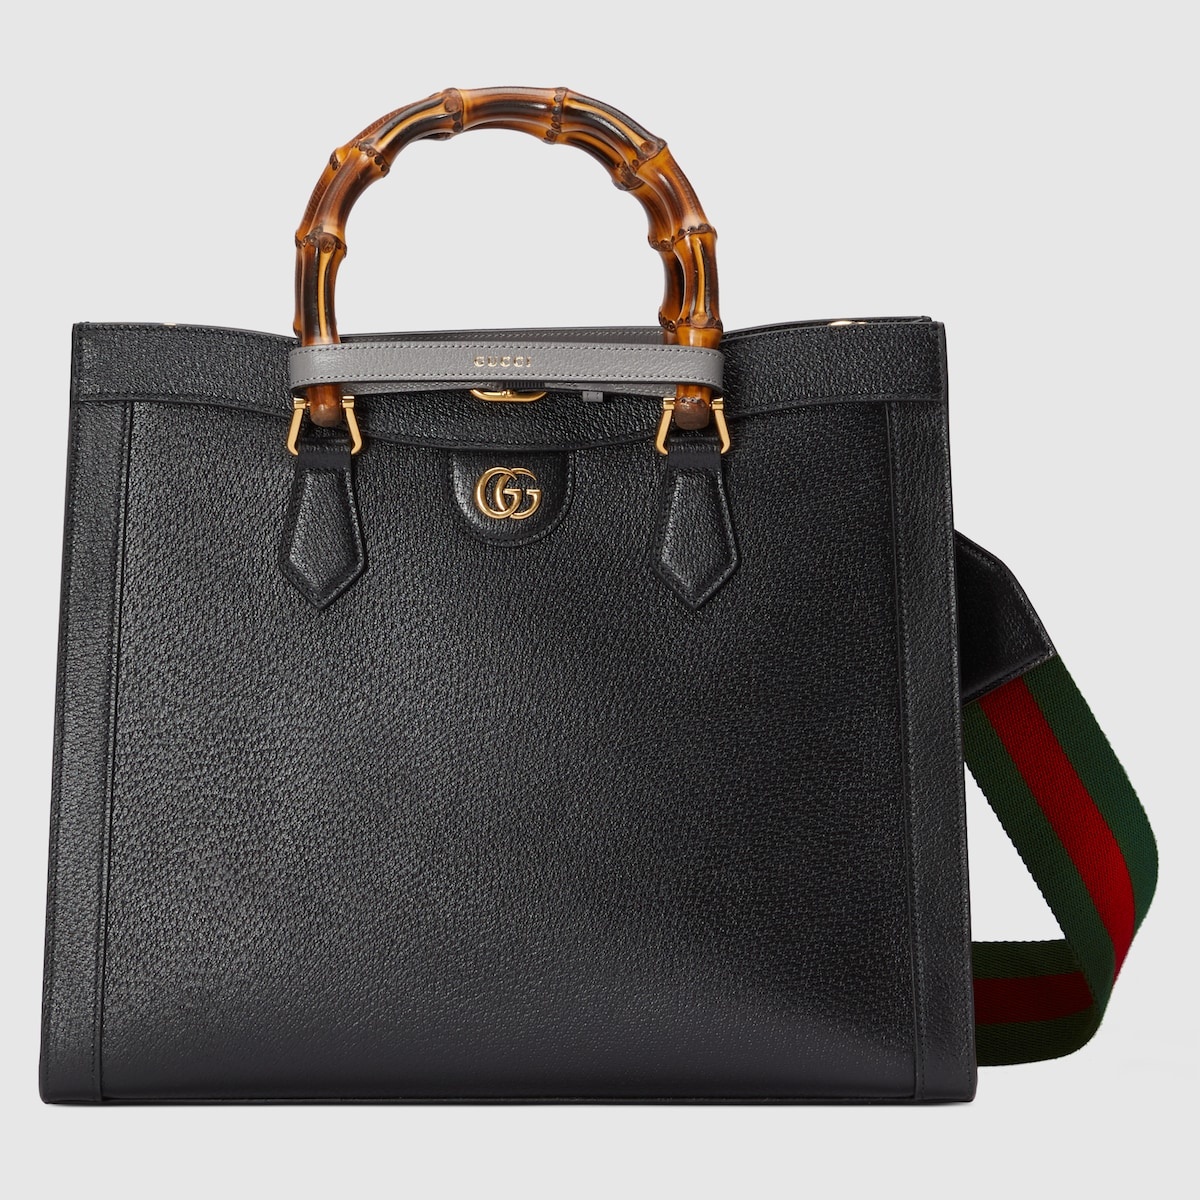 Gucci Diana medium tote bag - 1